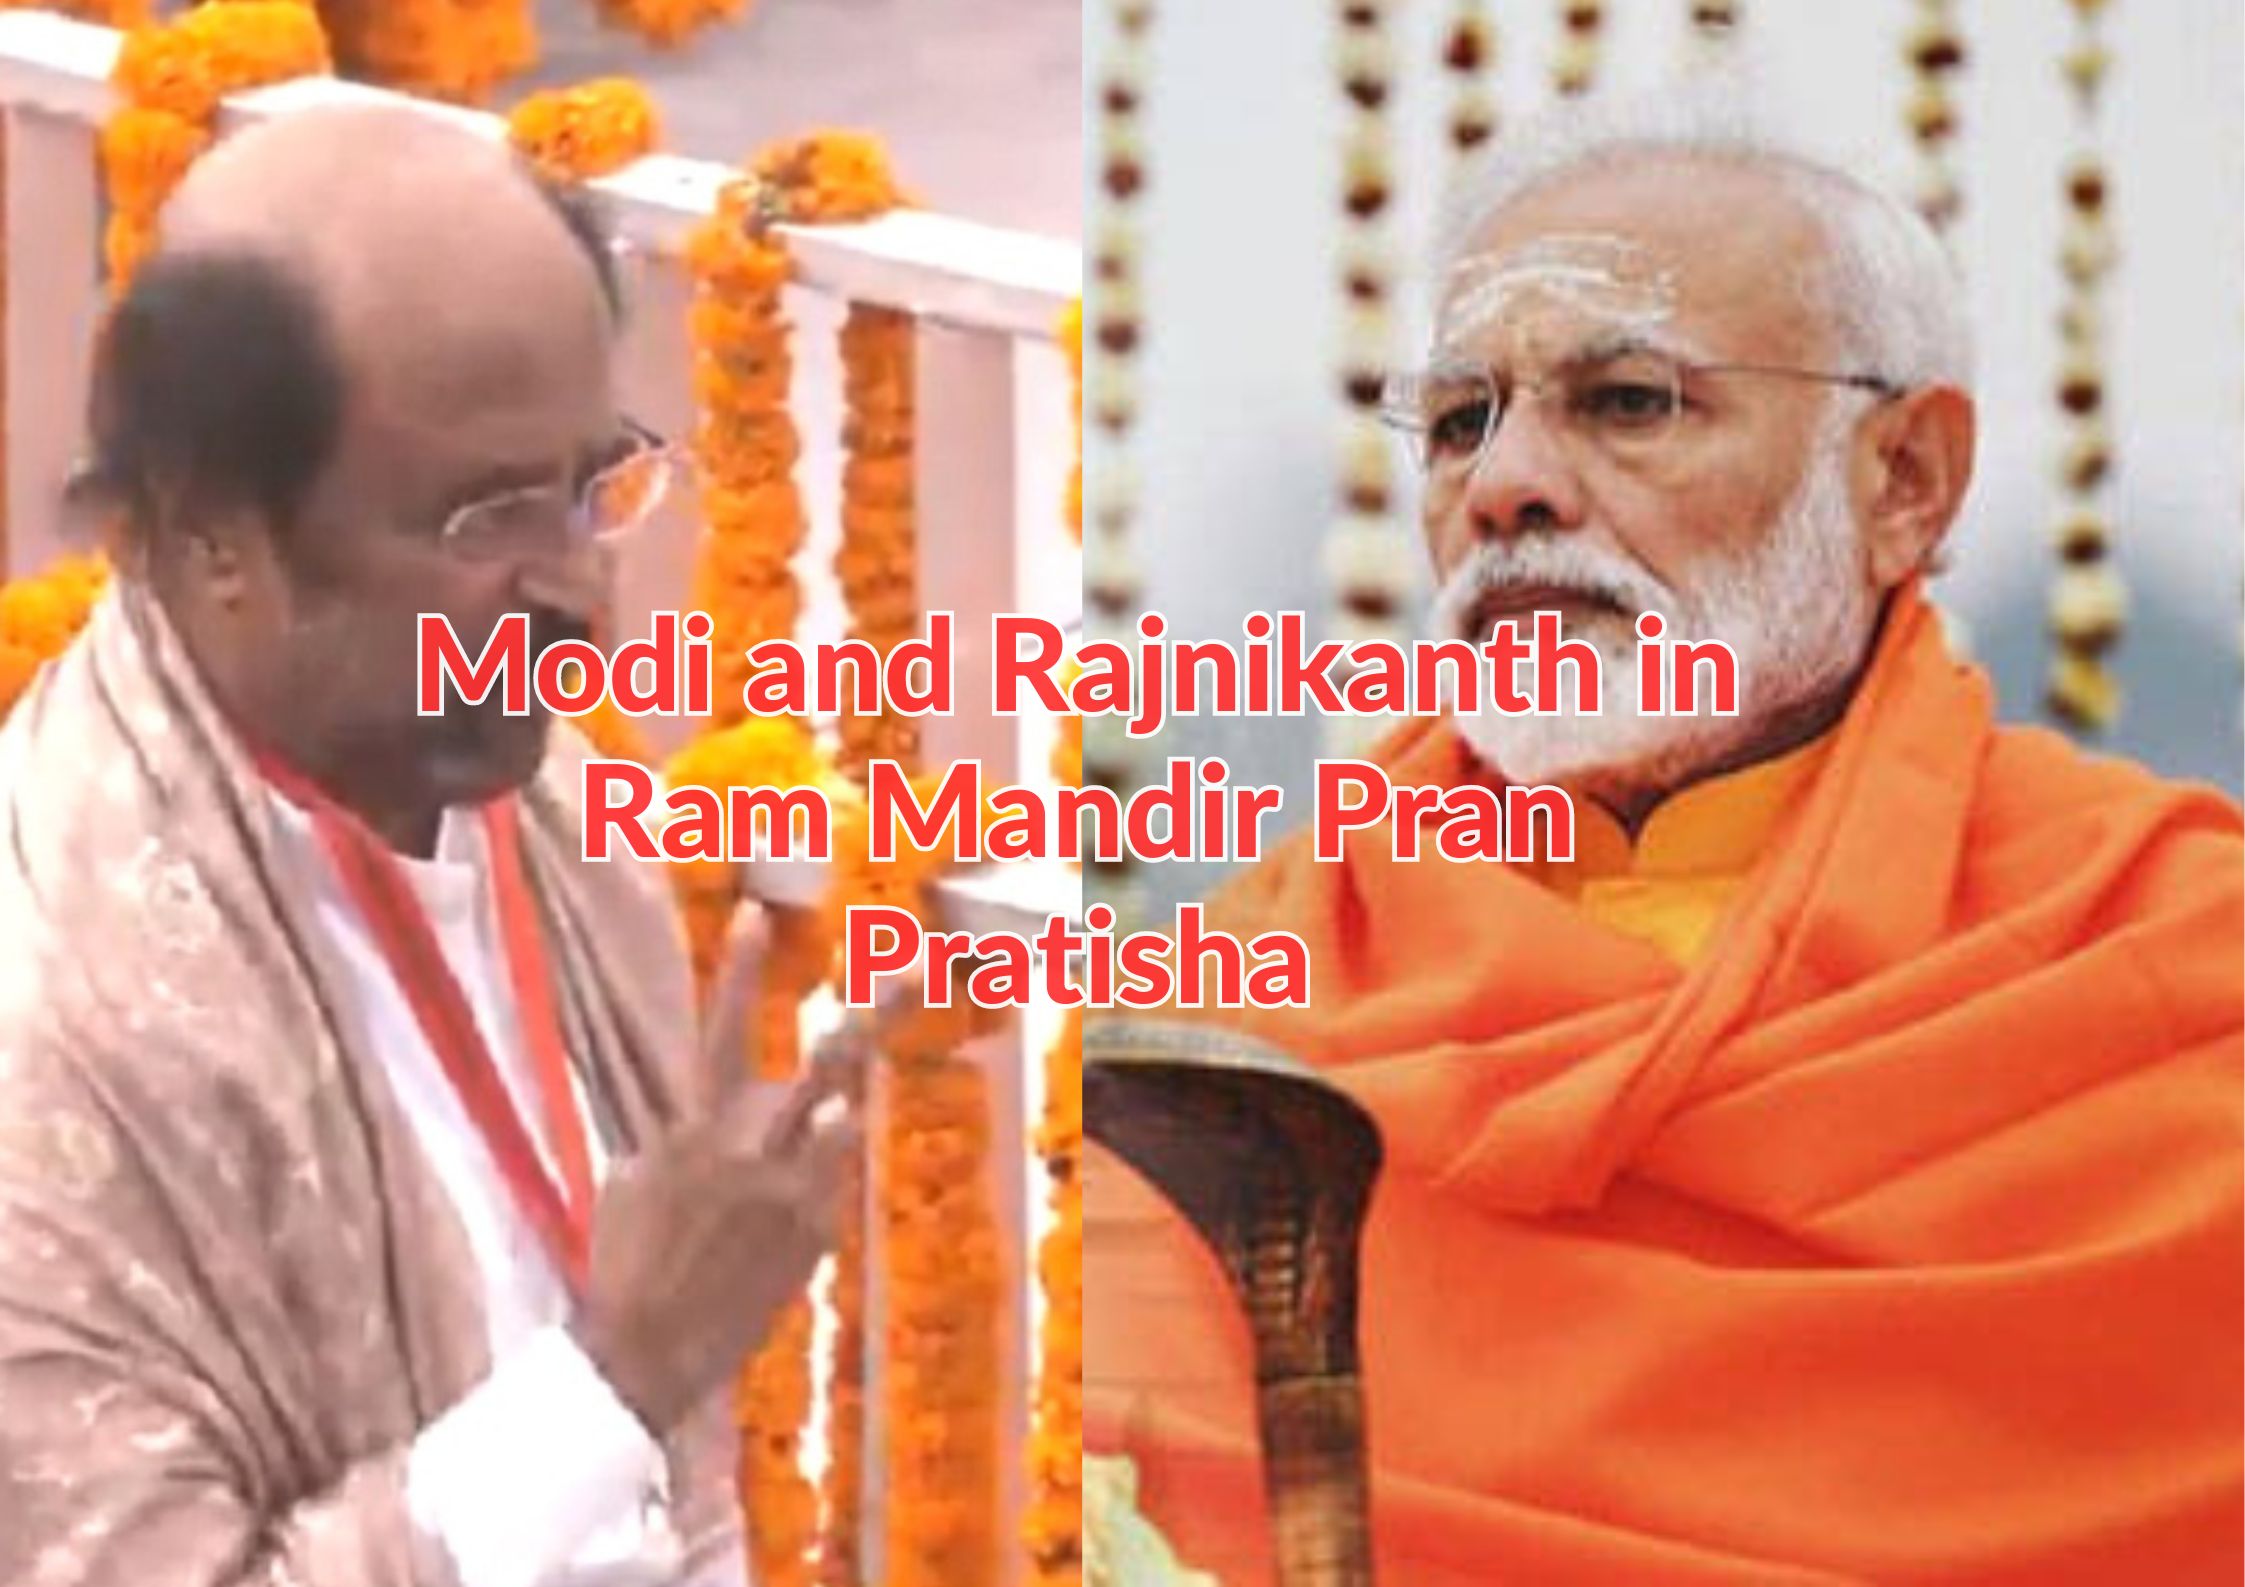 Ram Superstar Rajinikanth Graces Ayodhya's Ram Mandir Pran Pratishtha Ceremony | PM Modi Leads Historic Ritual consecration | Rajinikanth attends ‘Pran Pratishtha’ ceremony; greets PM Narendra Modi